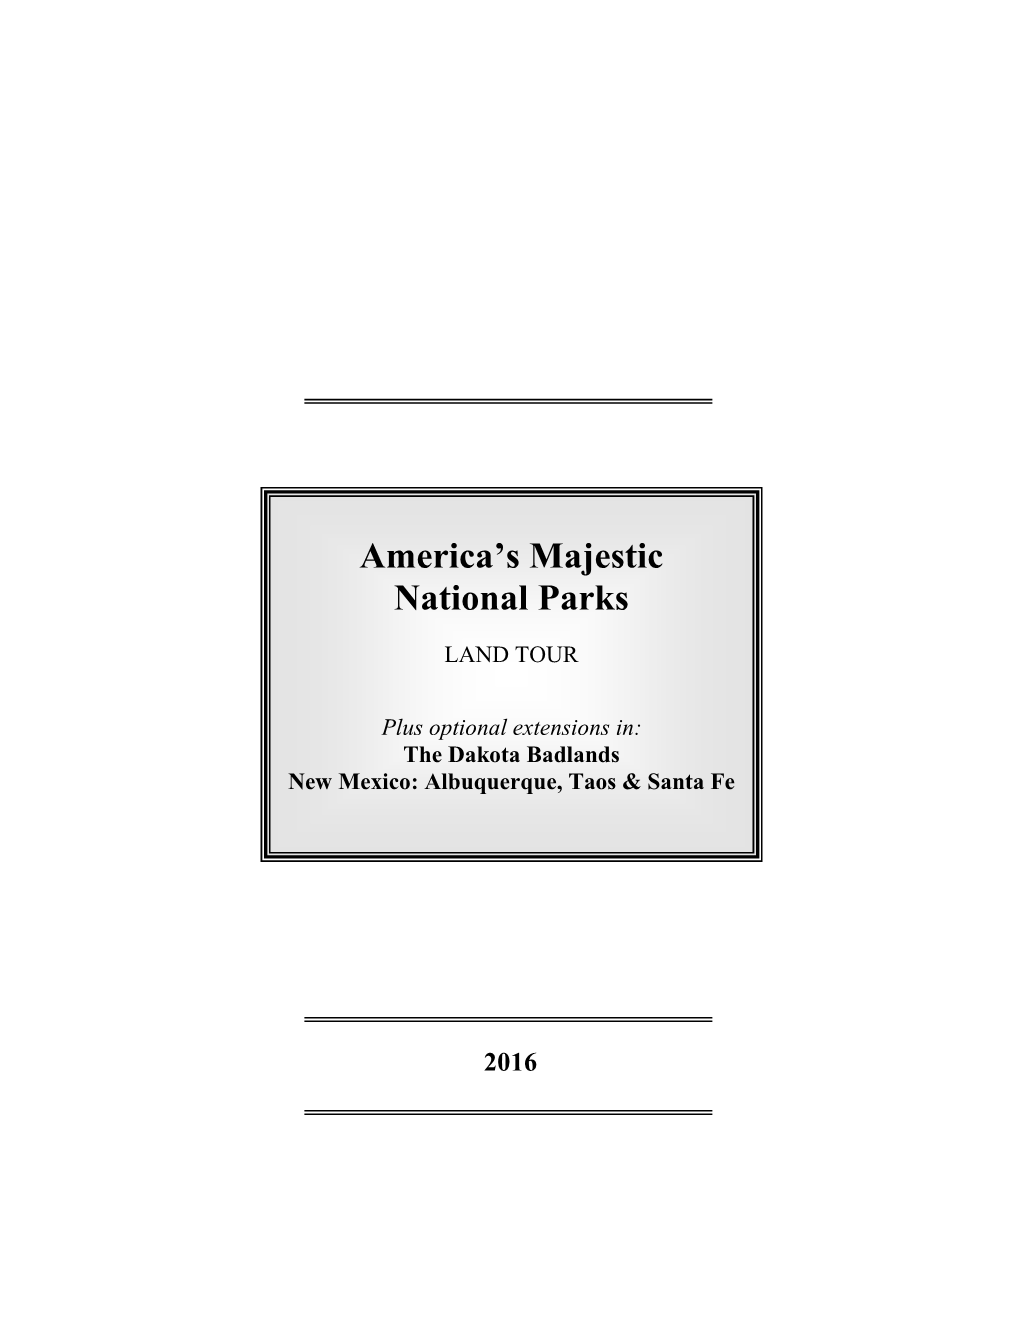 America's Majestic National Parks